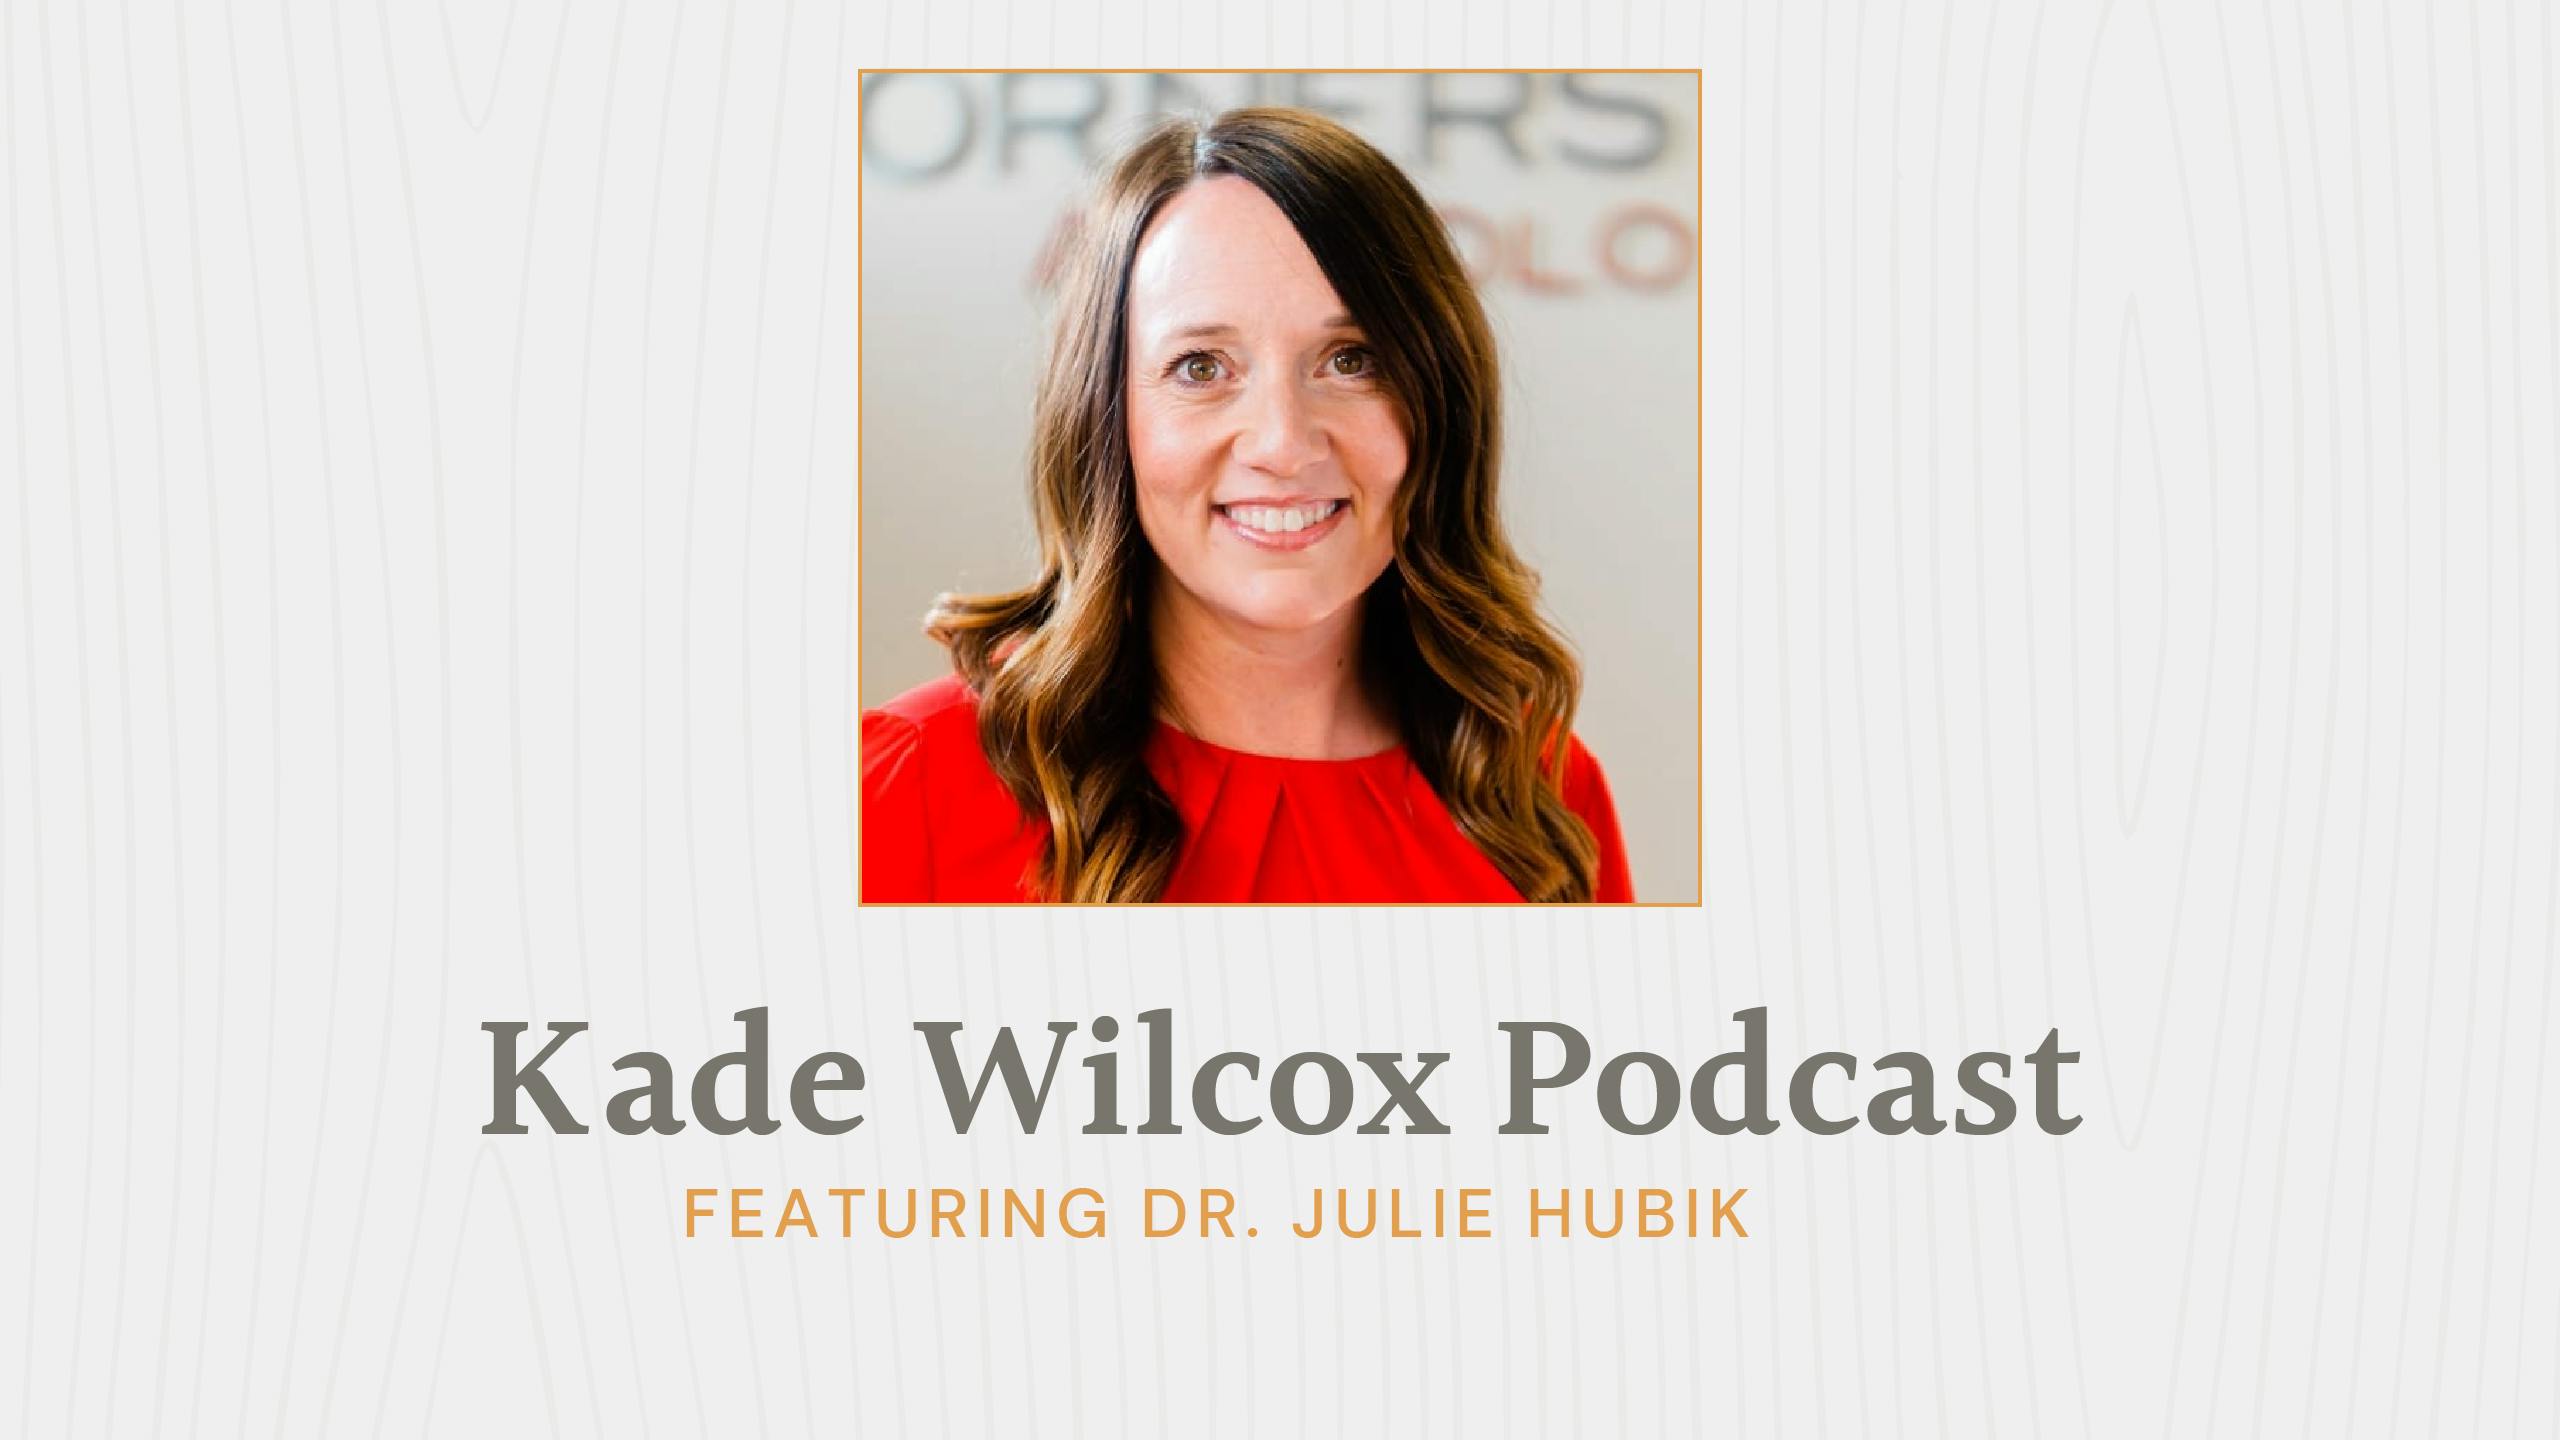 The Kade Wilcox Podcast: Dr. Julie Hubik image